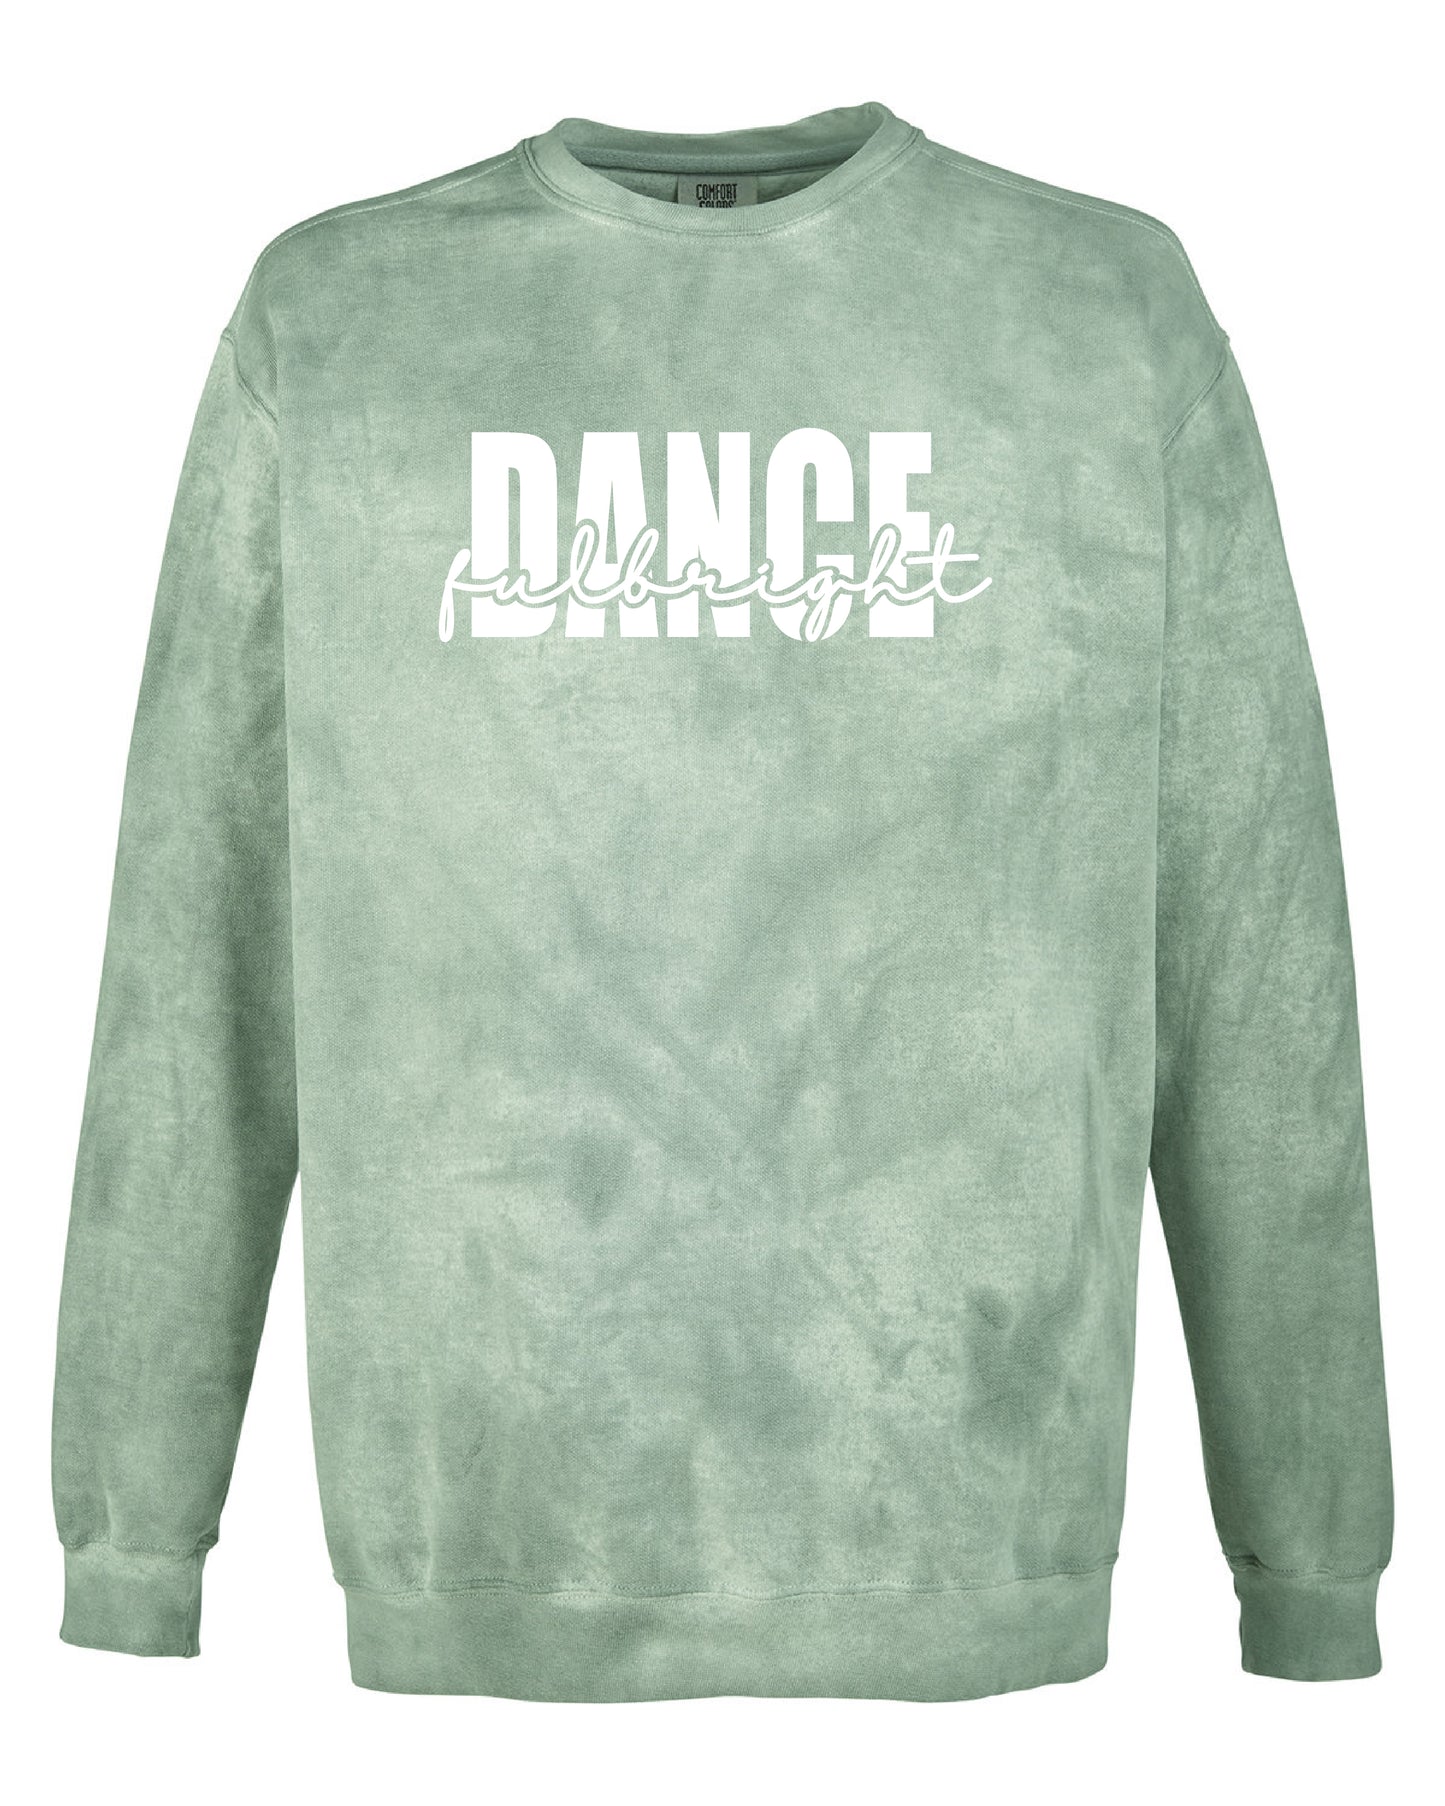 fulbright dance comfort color sweatshirt